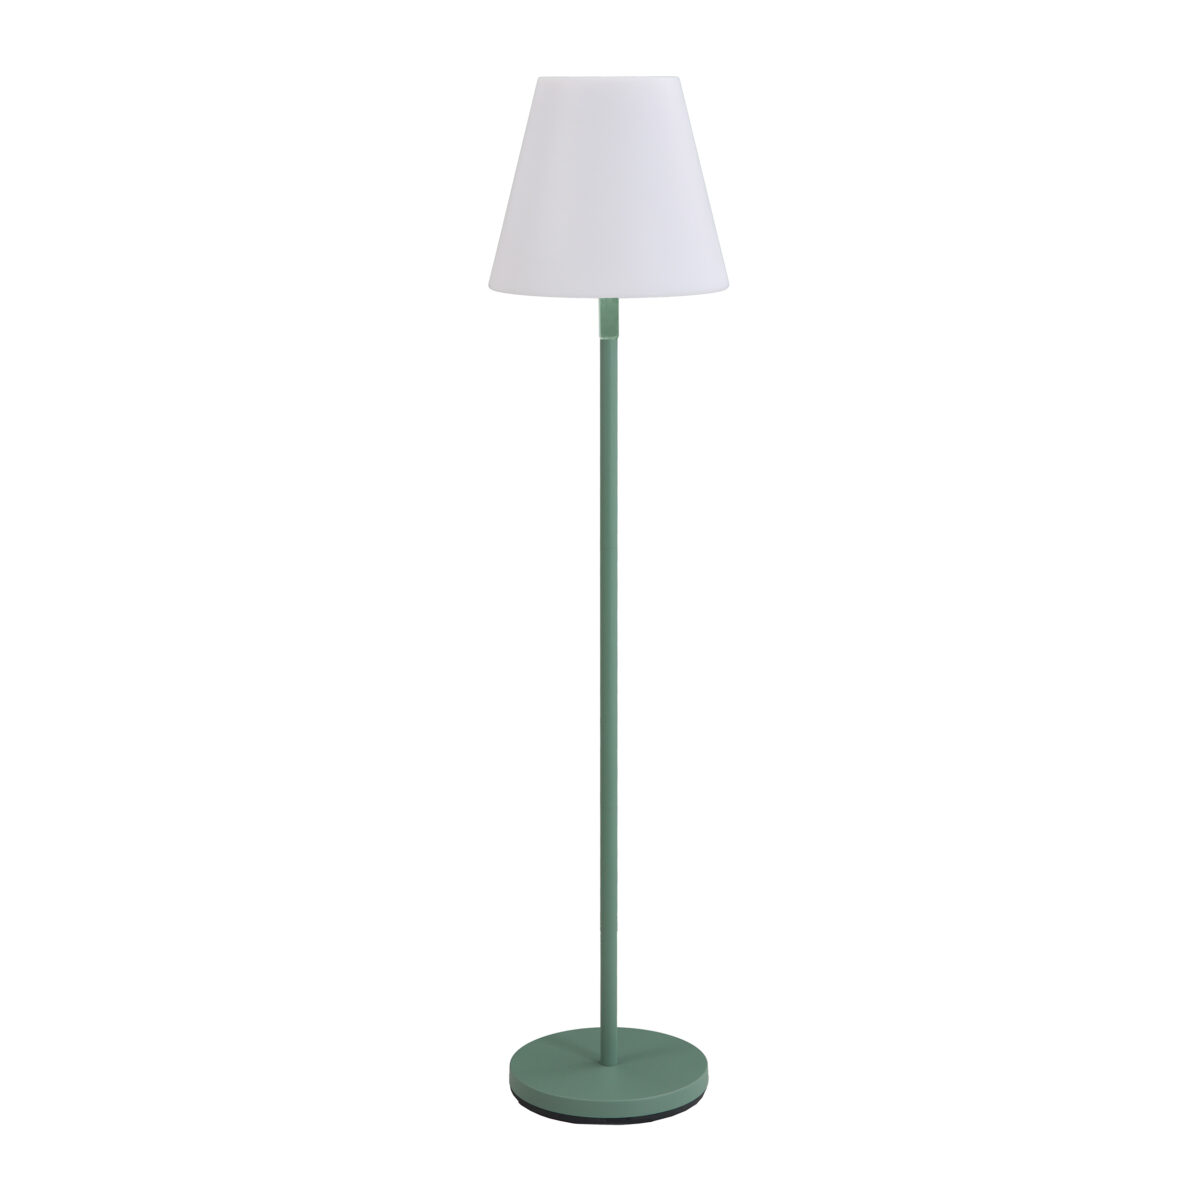 61351 stella floor lamp green 1 1